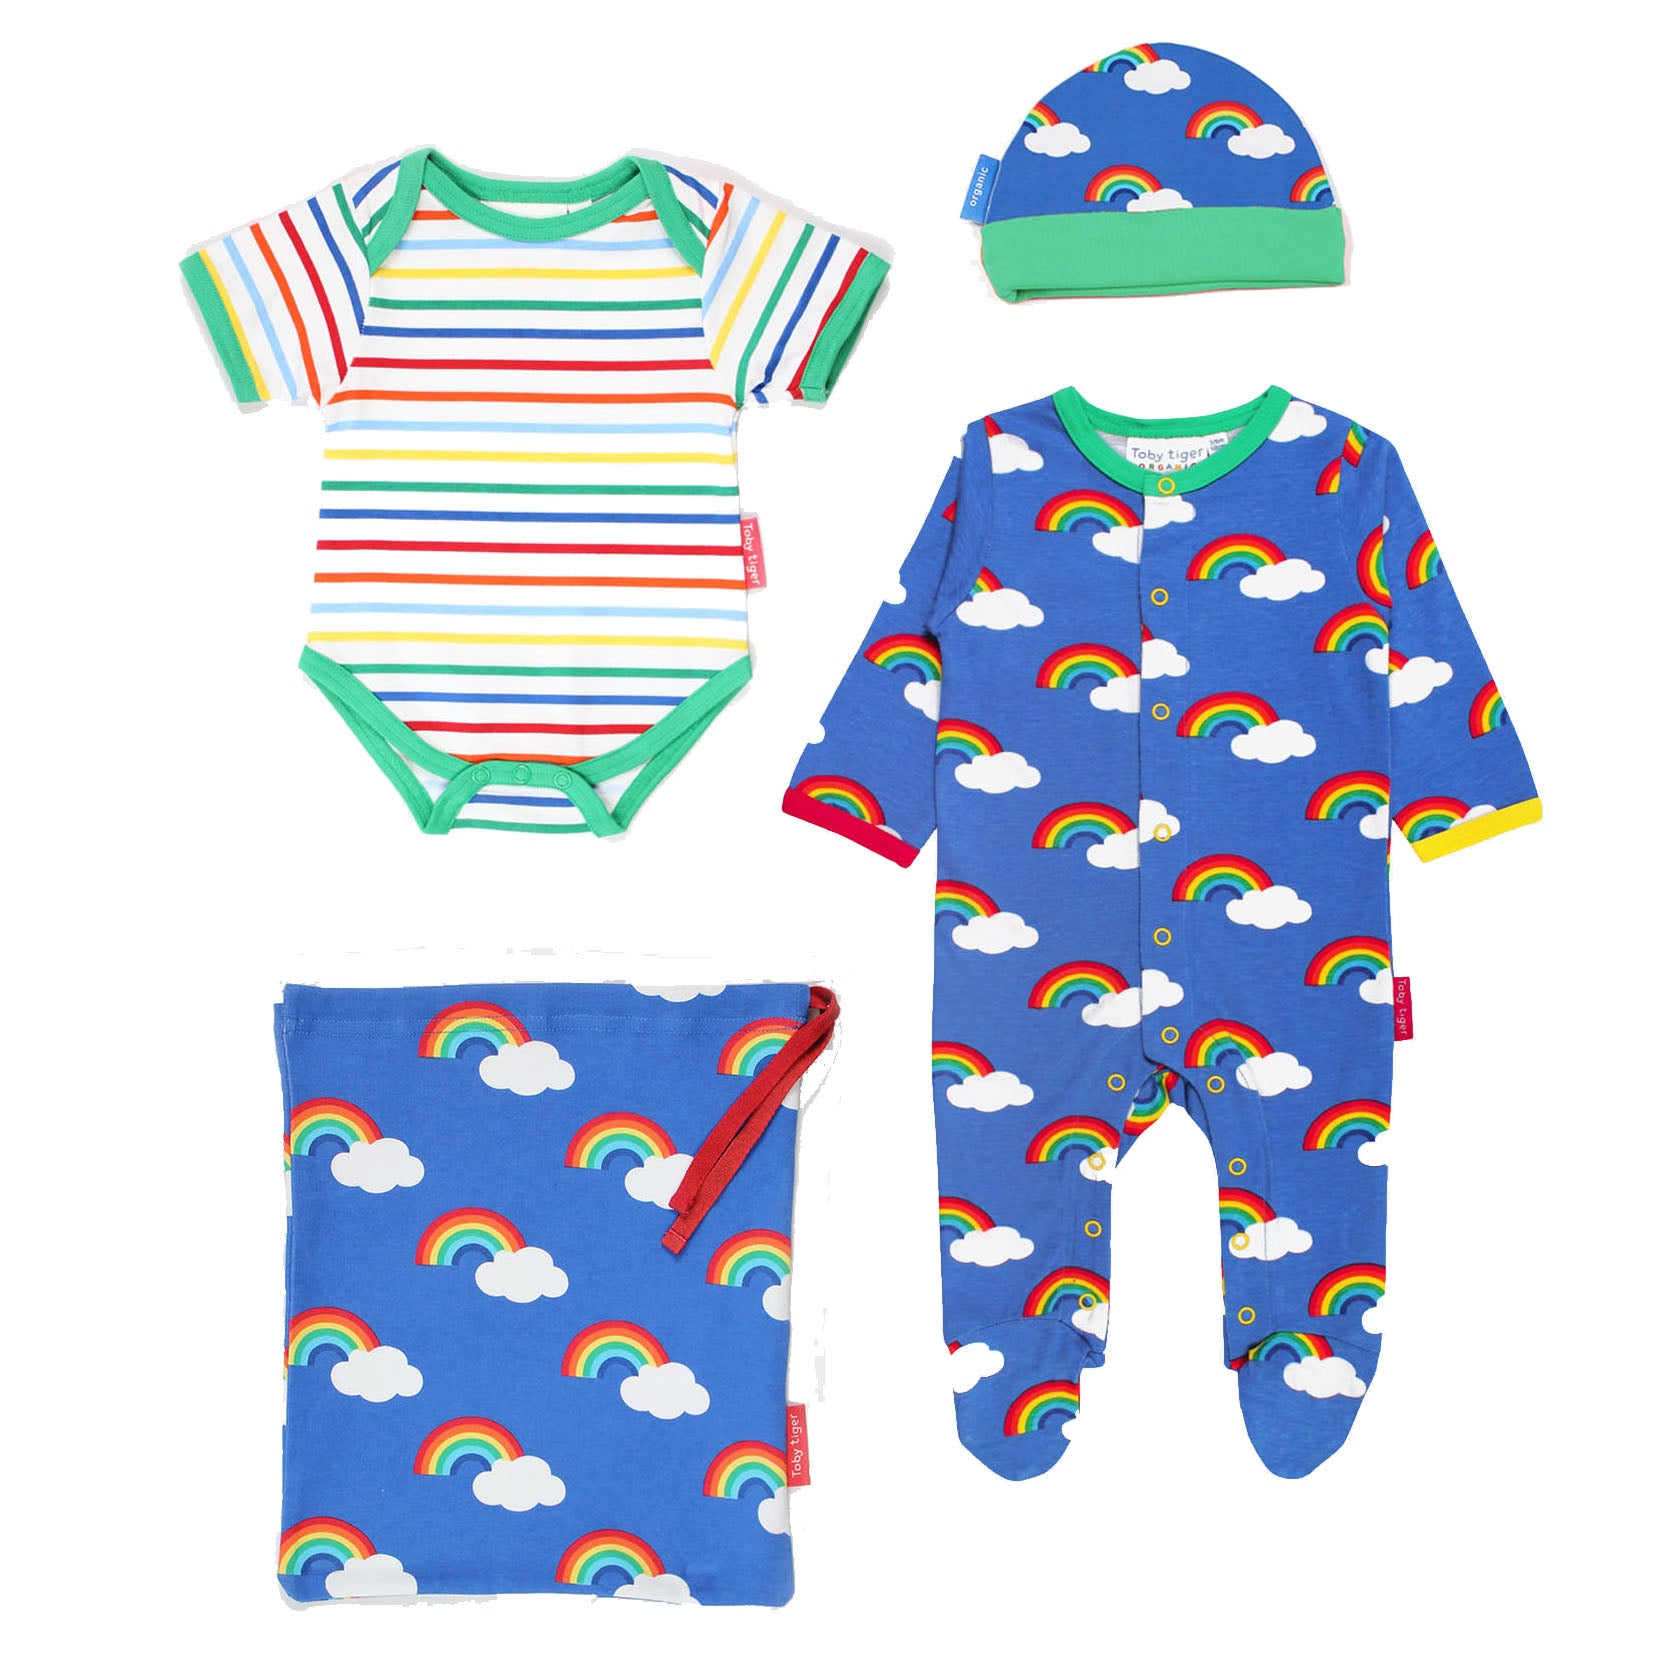 Toby Tiger Baby gift set- rainbow print